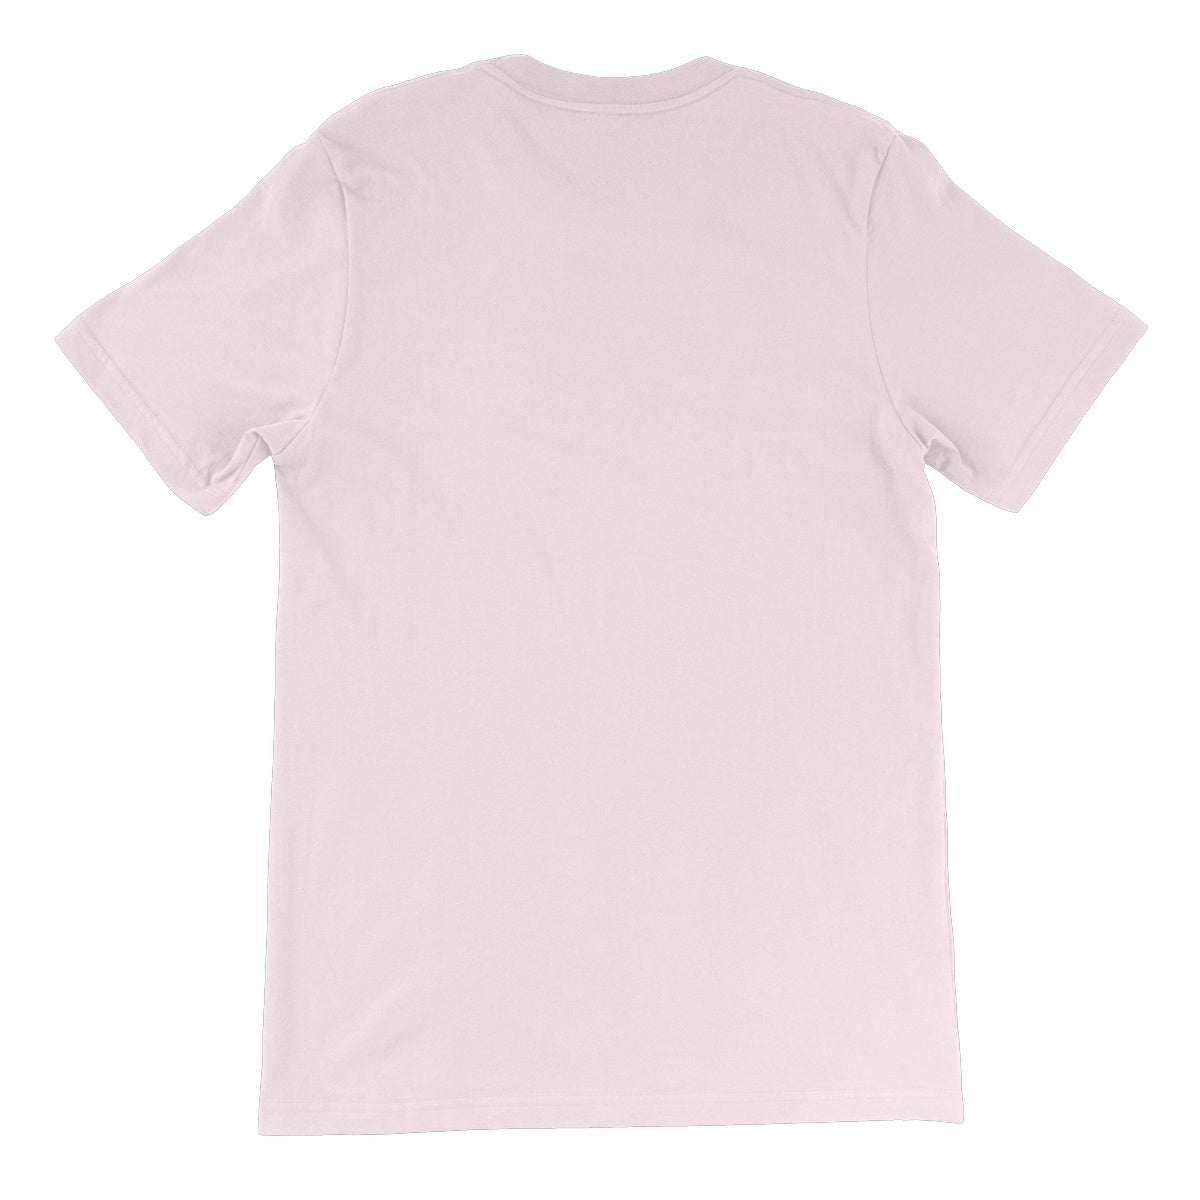 Gymp Unisex Short Sleeve T-Shirt